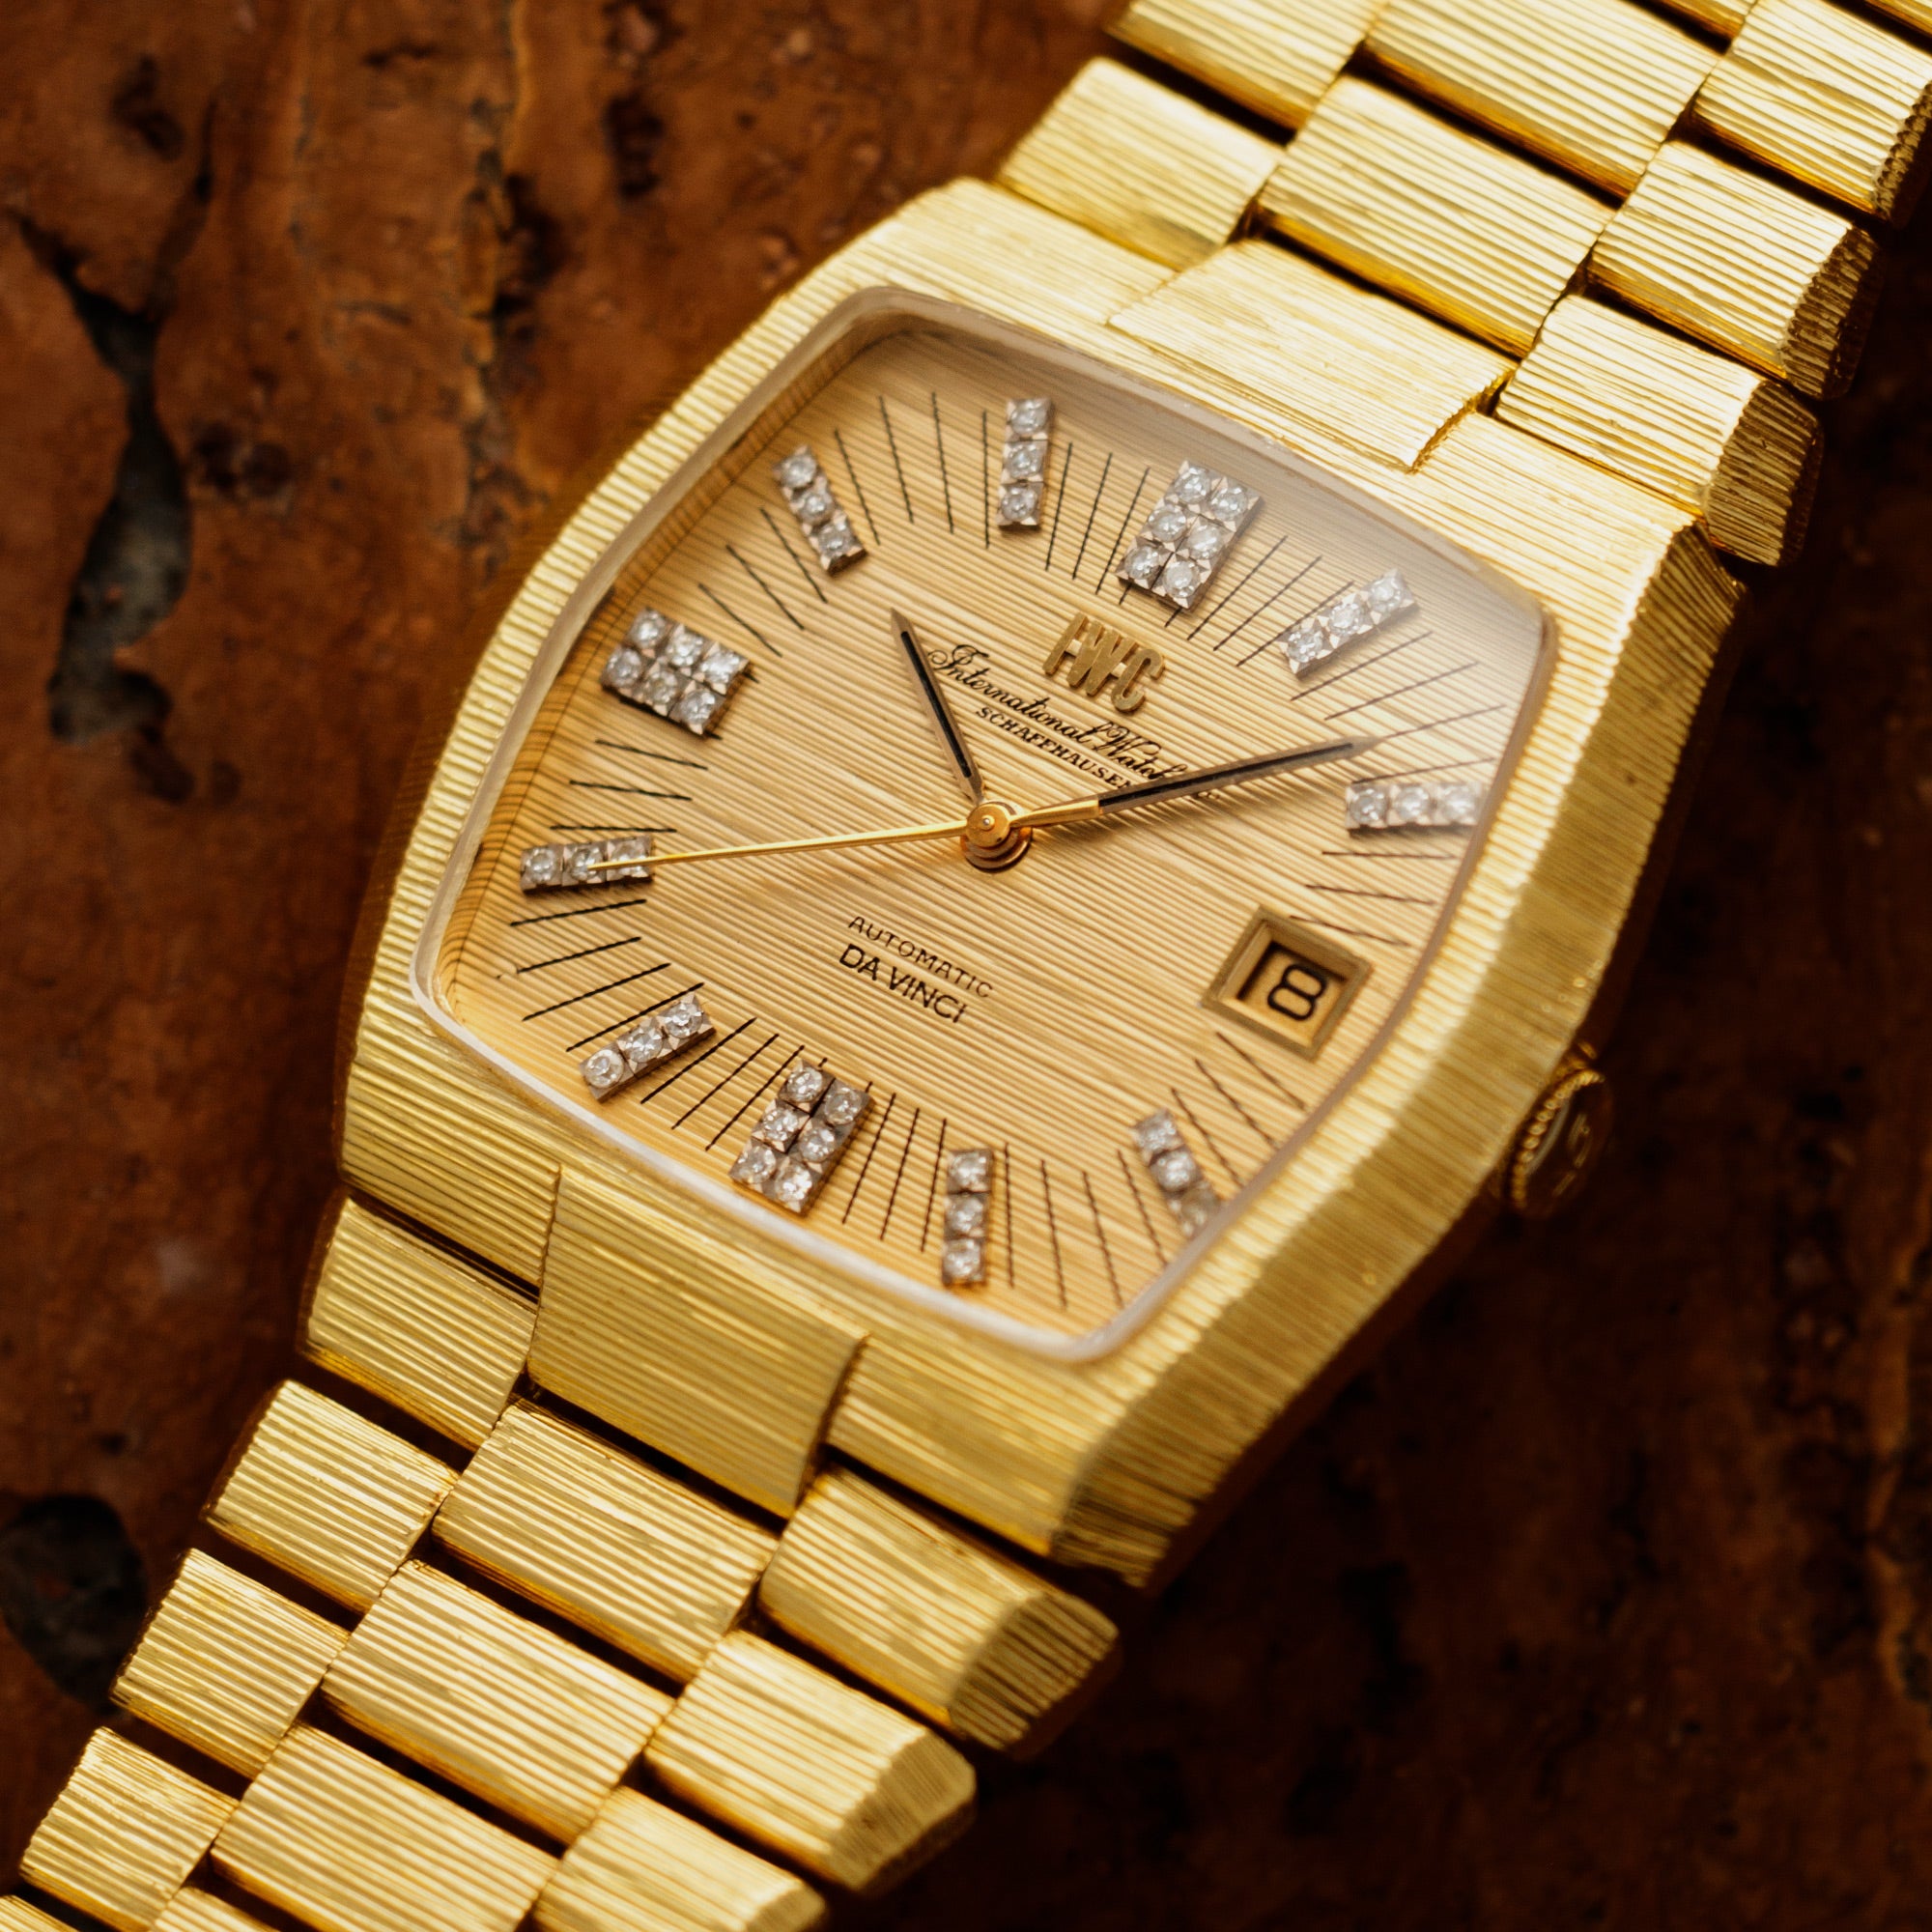 IWC - IWC Yellow Gold Da Vinci with Original Bark Finish - The Keystone Watches